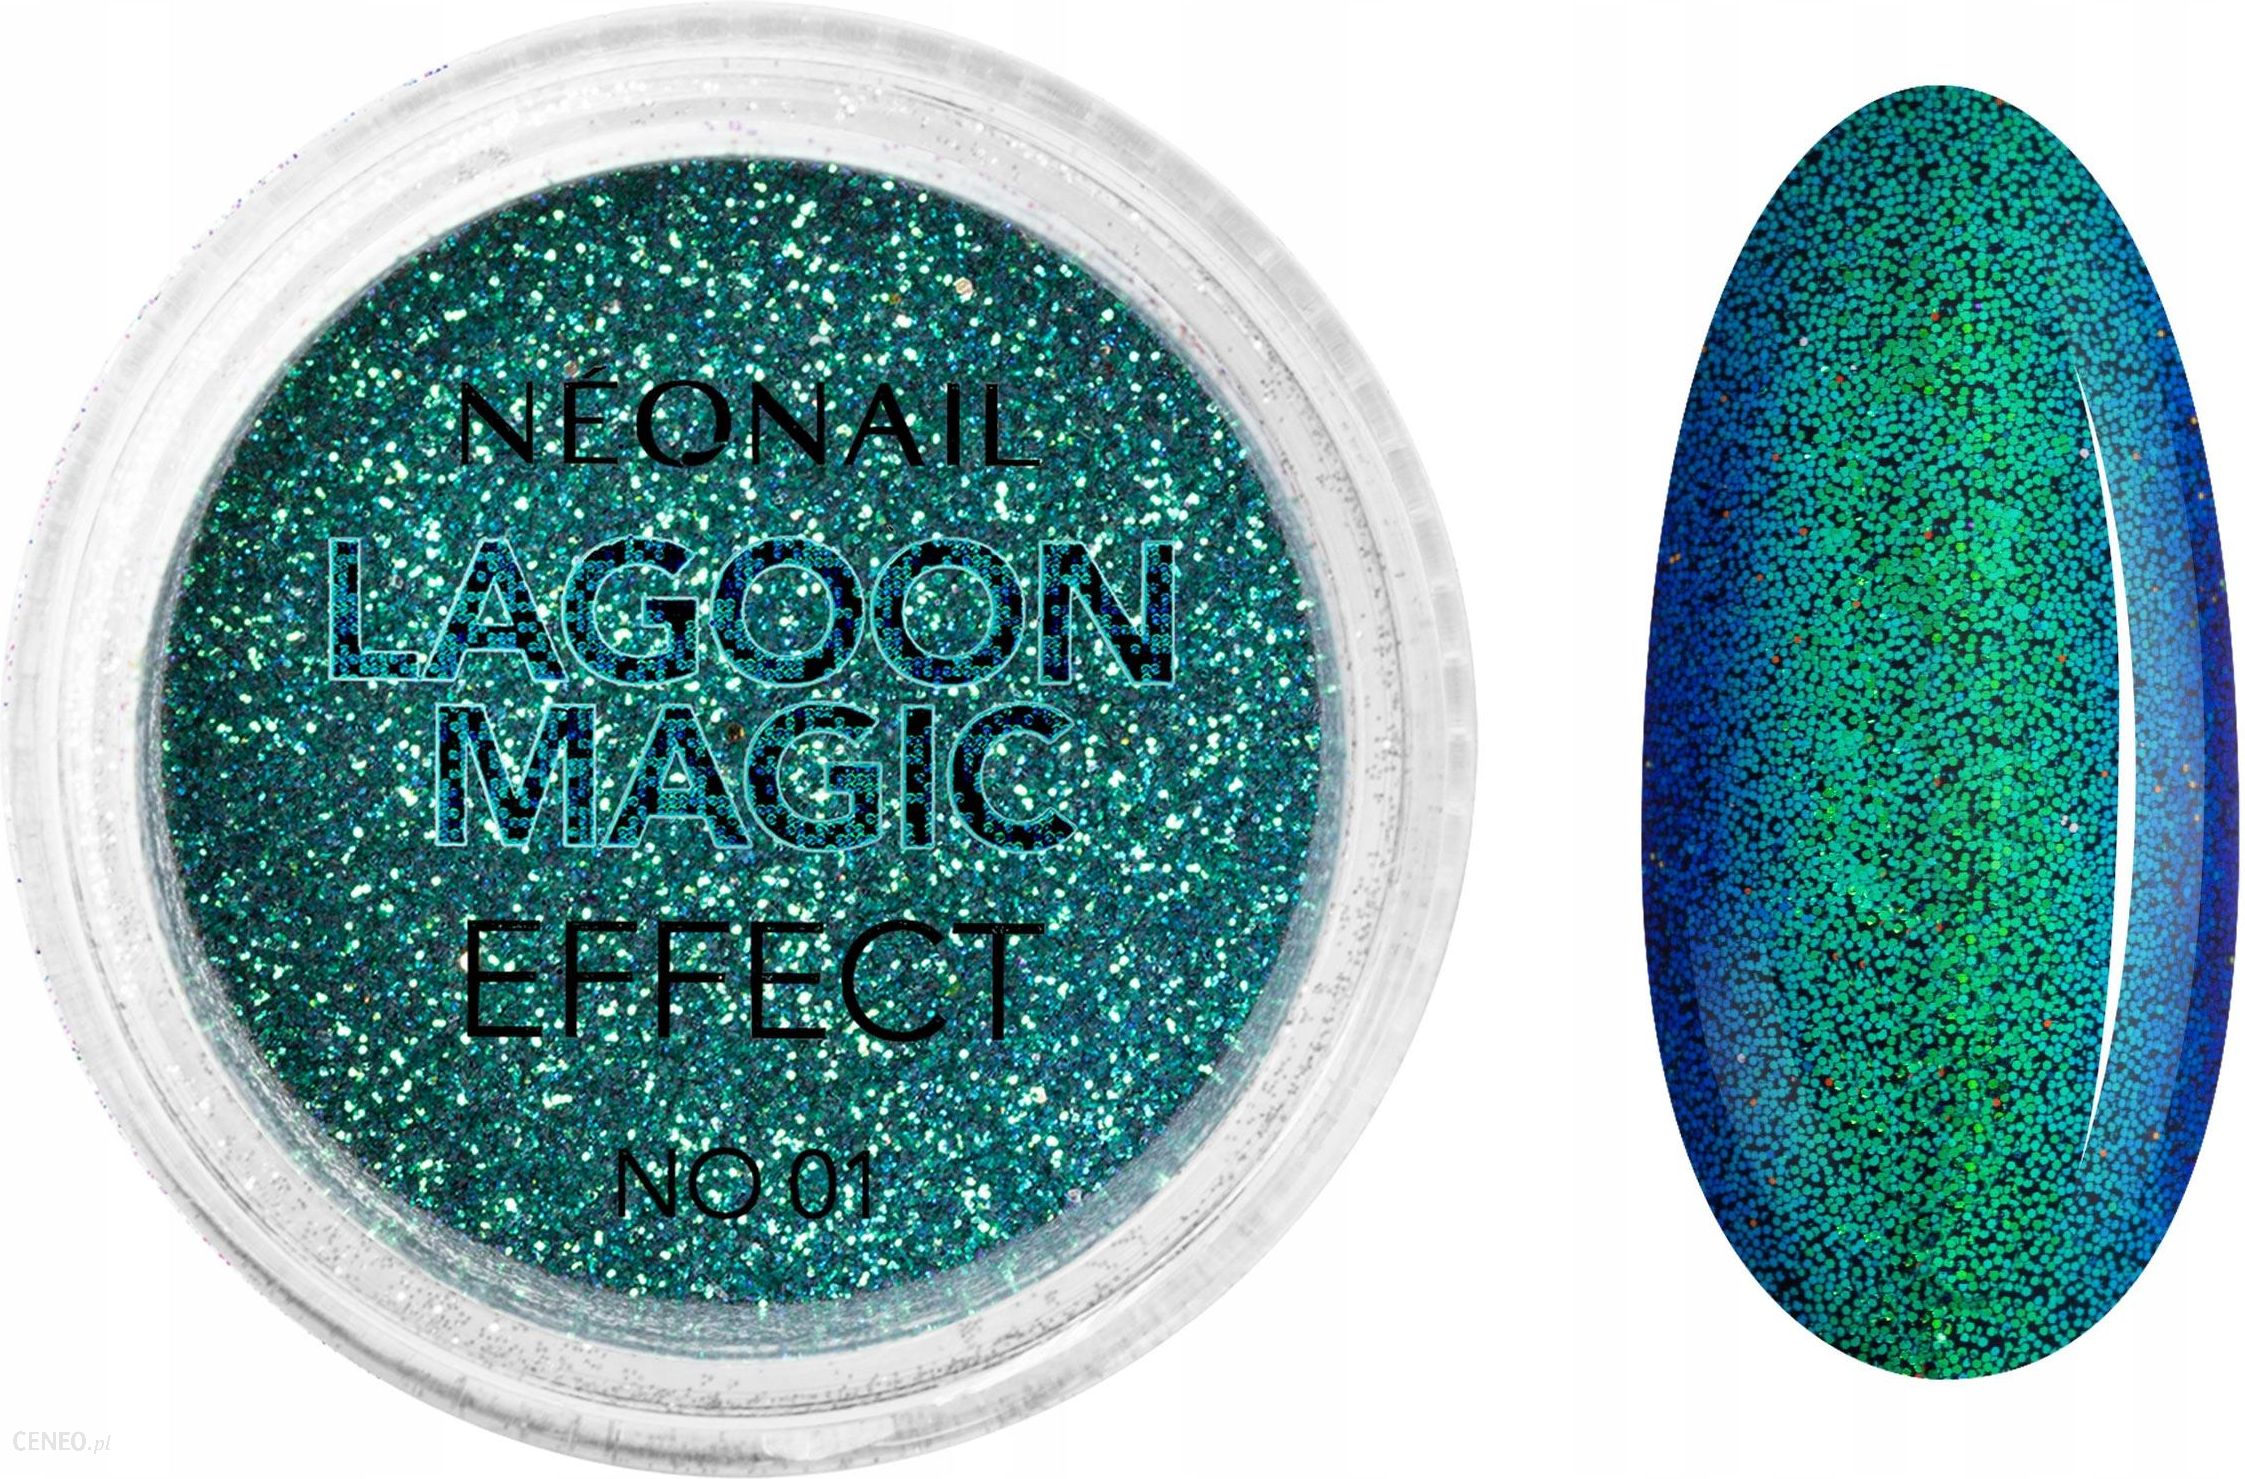 Neonail Pyłek Do Zdobień Lagoon Magic Effect 01 2G